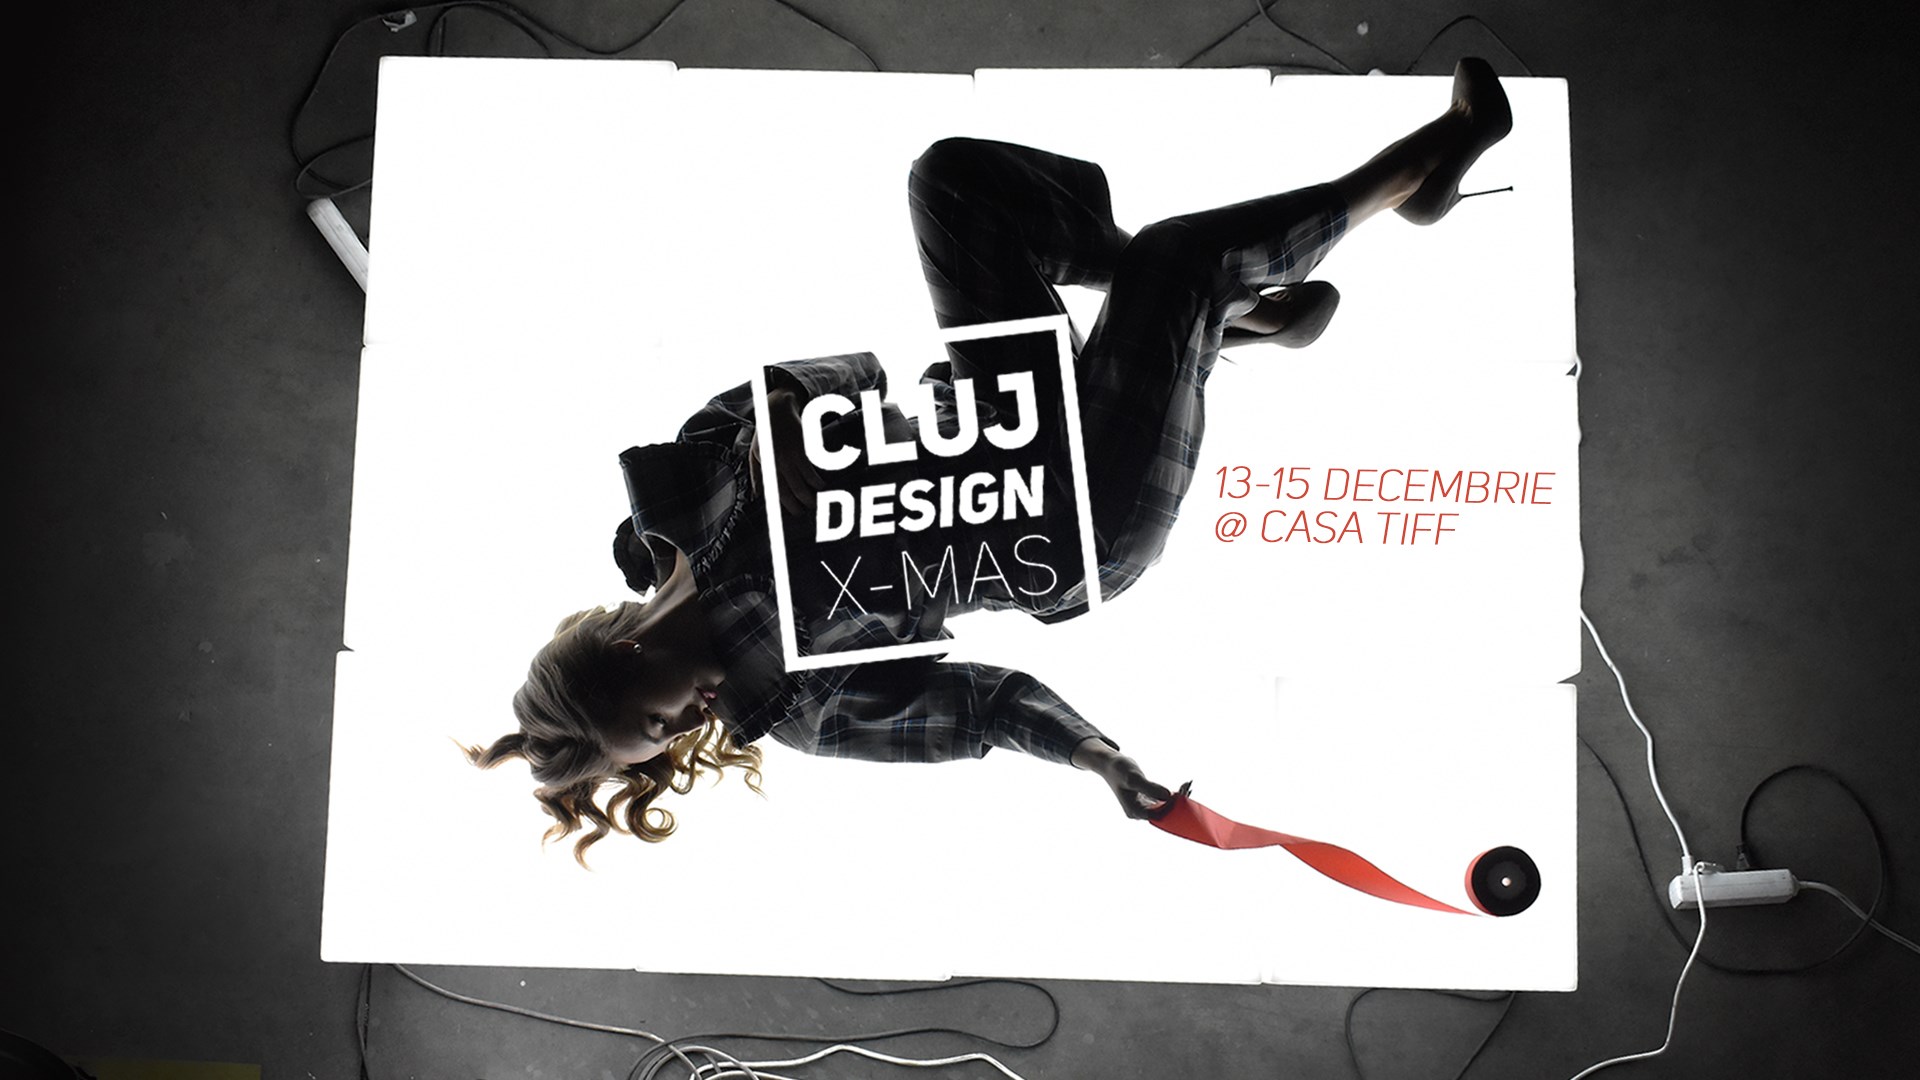 Cluj Design Christmas Edition